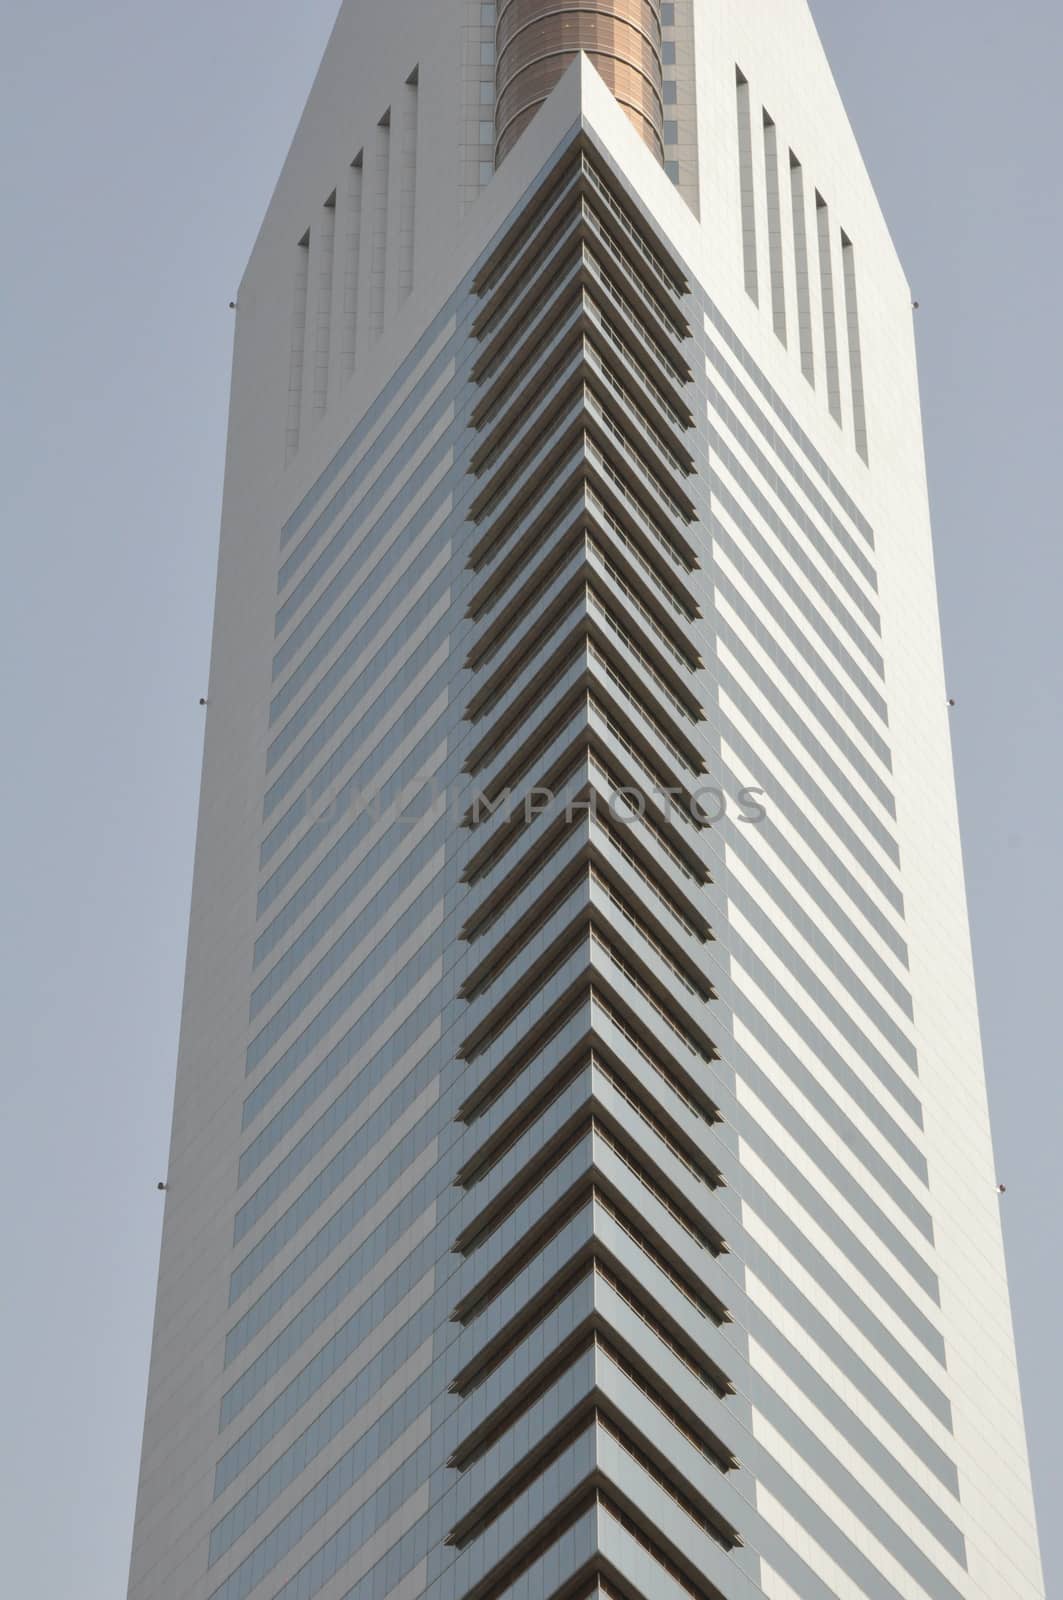 Emirates Towers in Dubai, United Arab Emirates (UAE) by sainaniritu